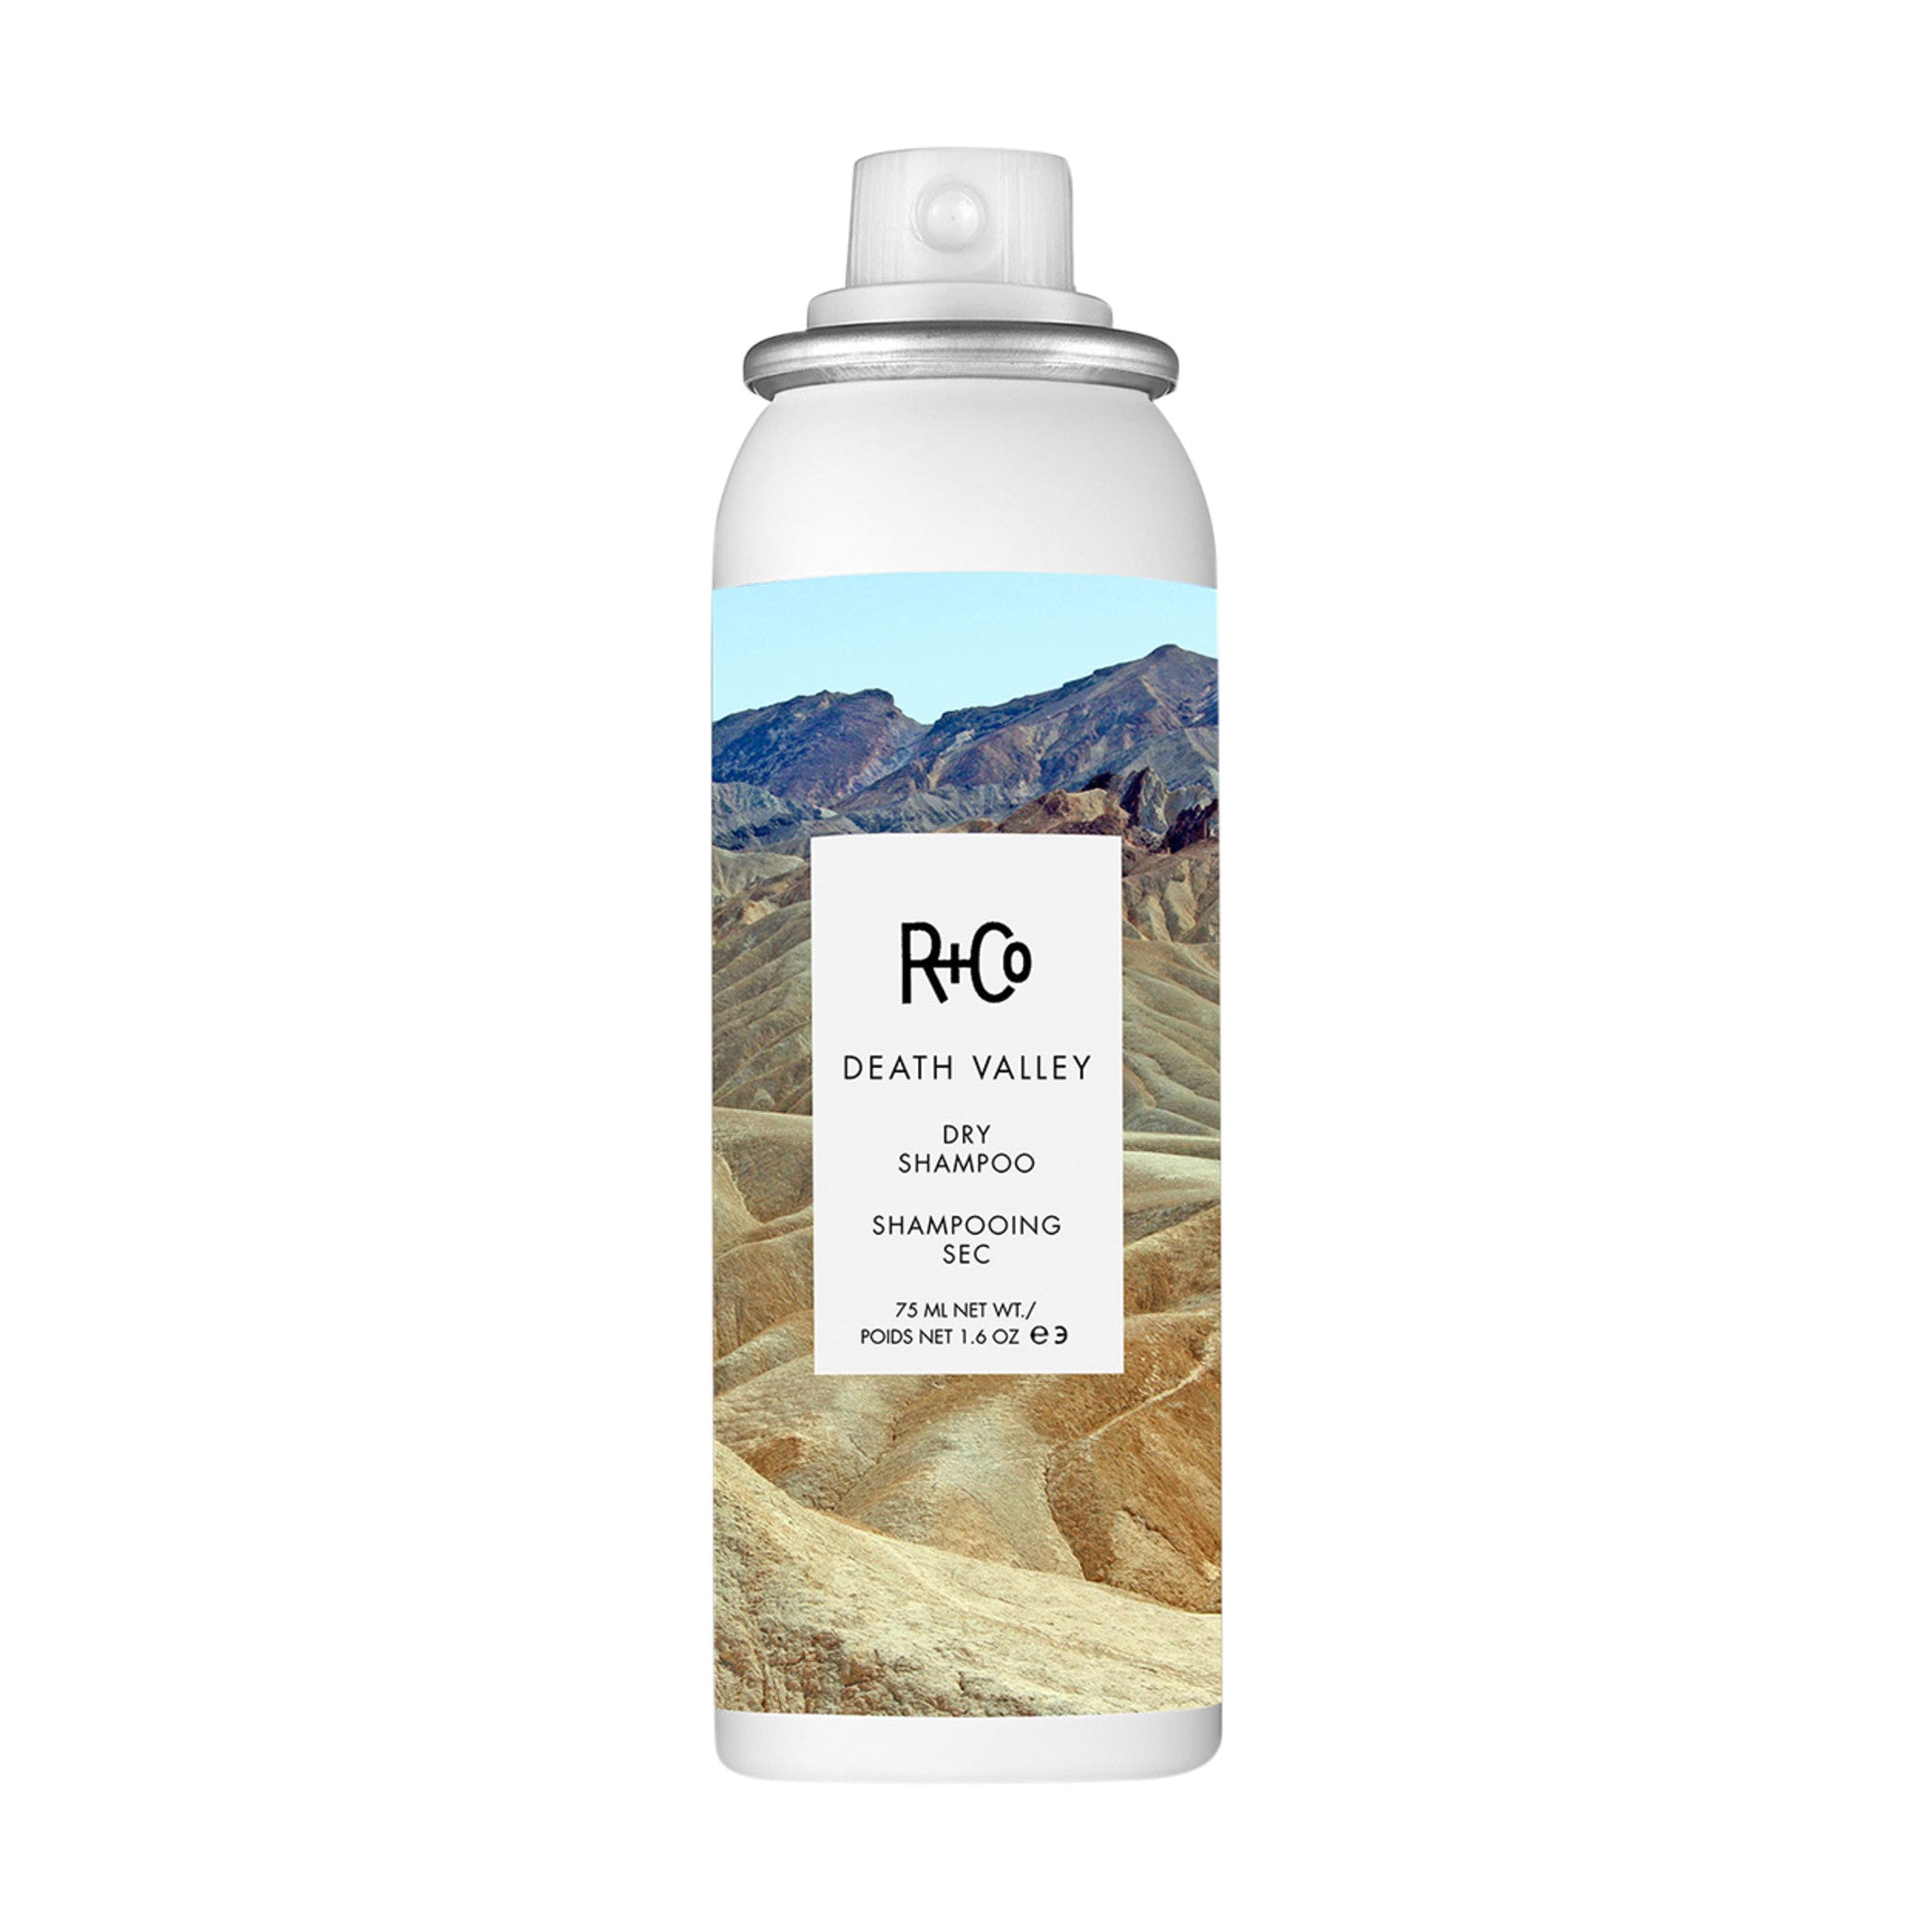 R+Co Death Valley Dry Shampoo Size variant: 1.6 fl oz main image.